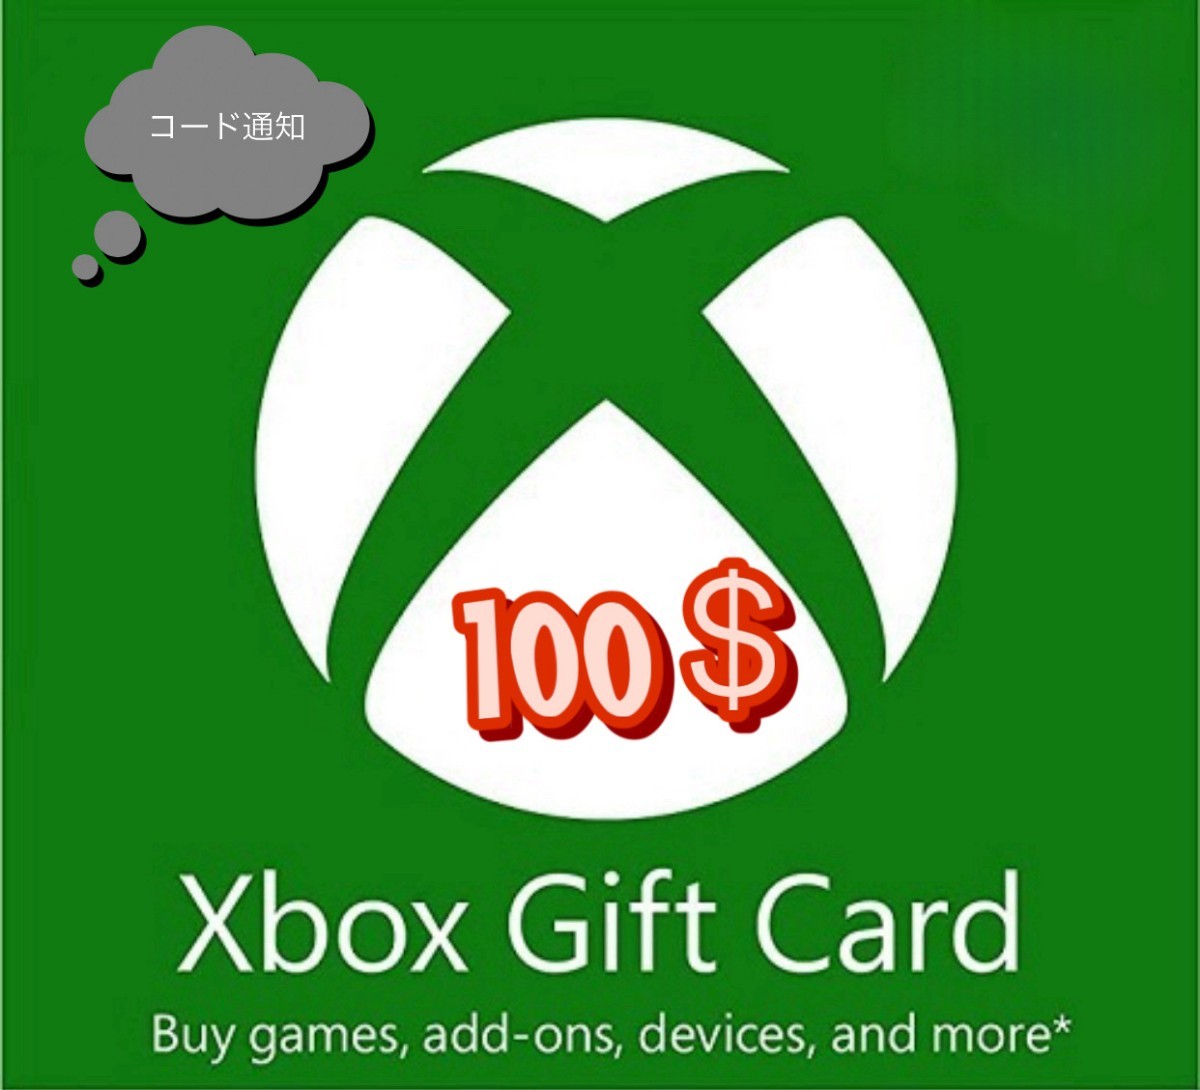 USA 北米版 Xbox100ドル XBOXギフトカード $100 コード通知の画像1